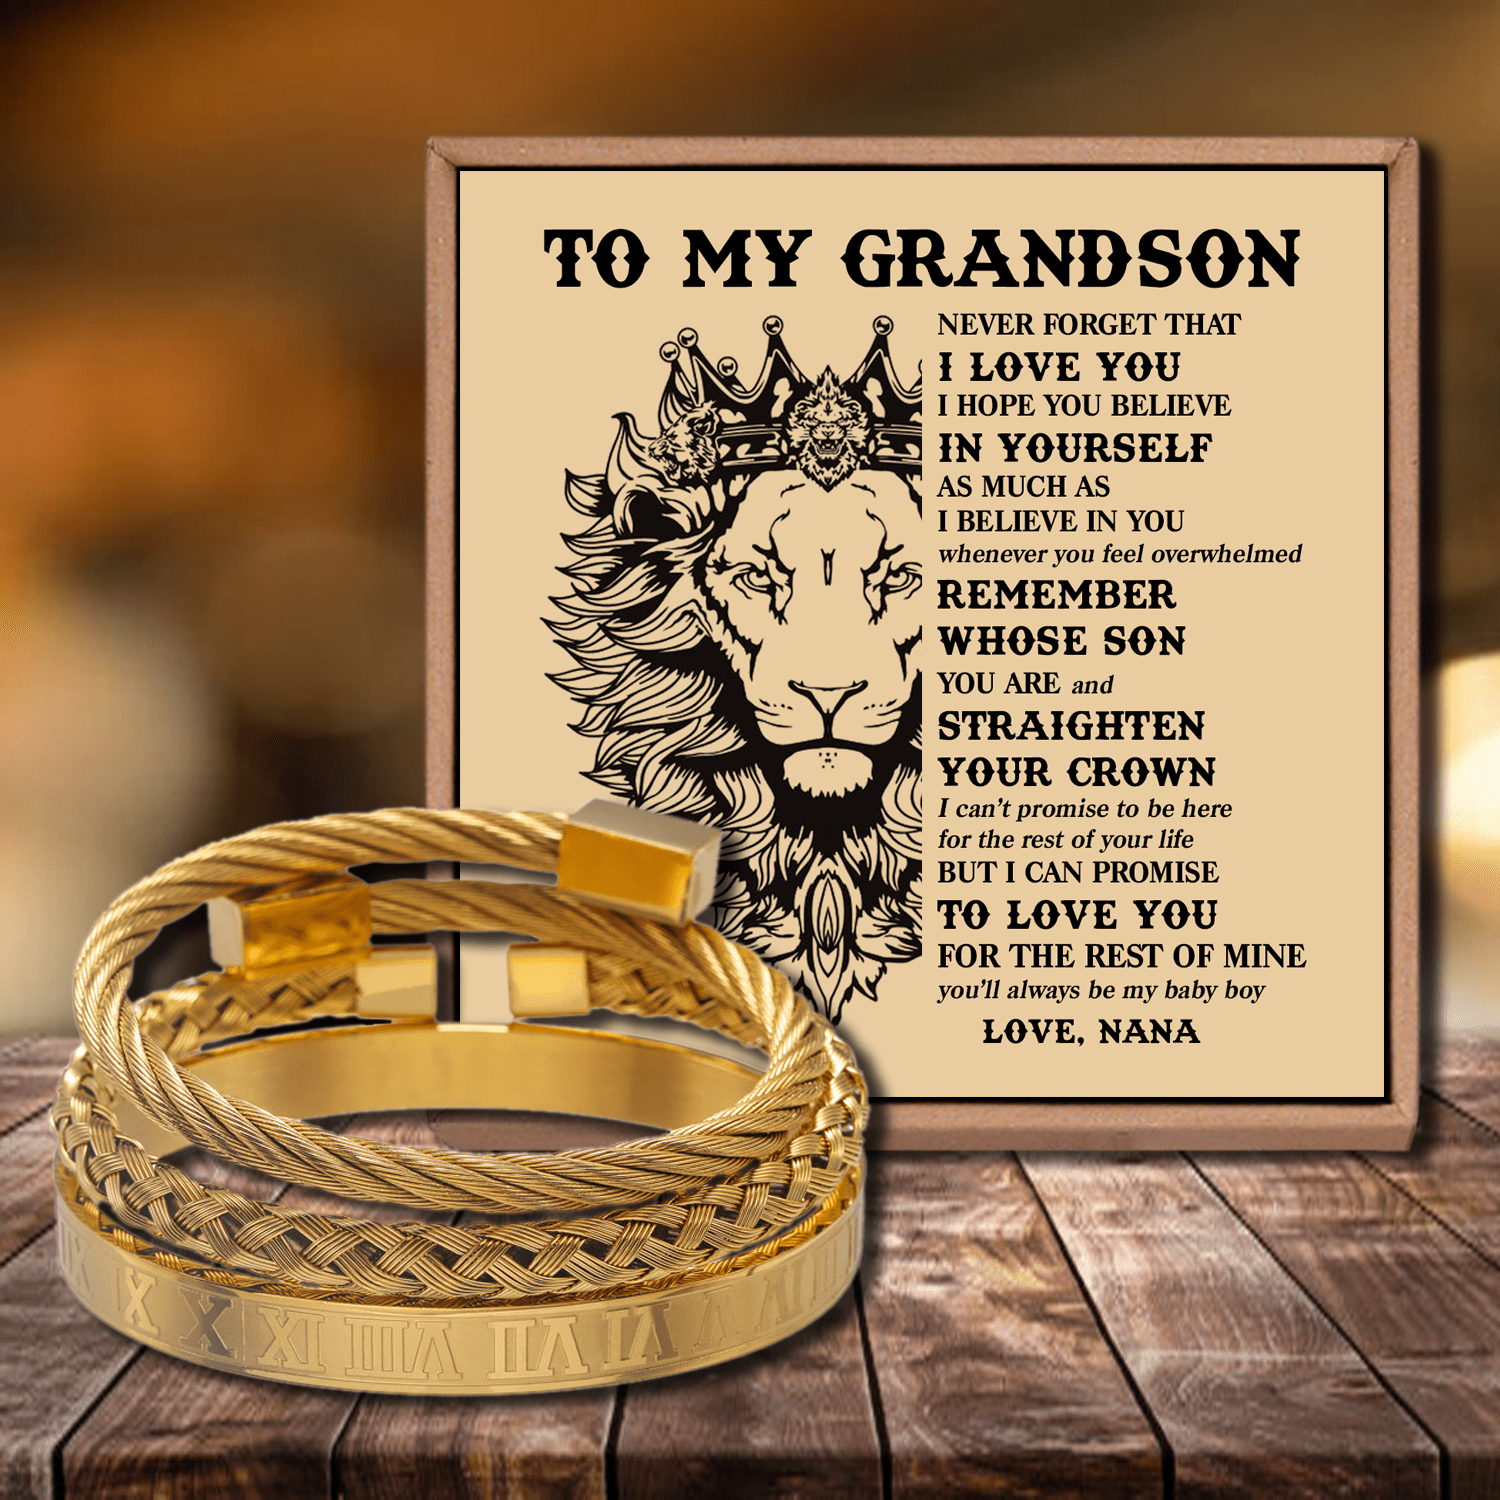 Bracelets Nana To Grandson - Straighten Your Crown Roman Numeral Bracelet Set Gold GiveMe-Gifts